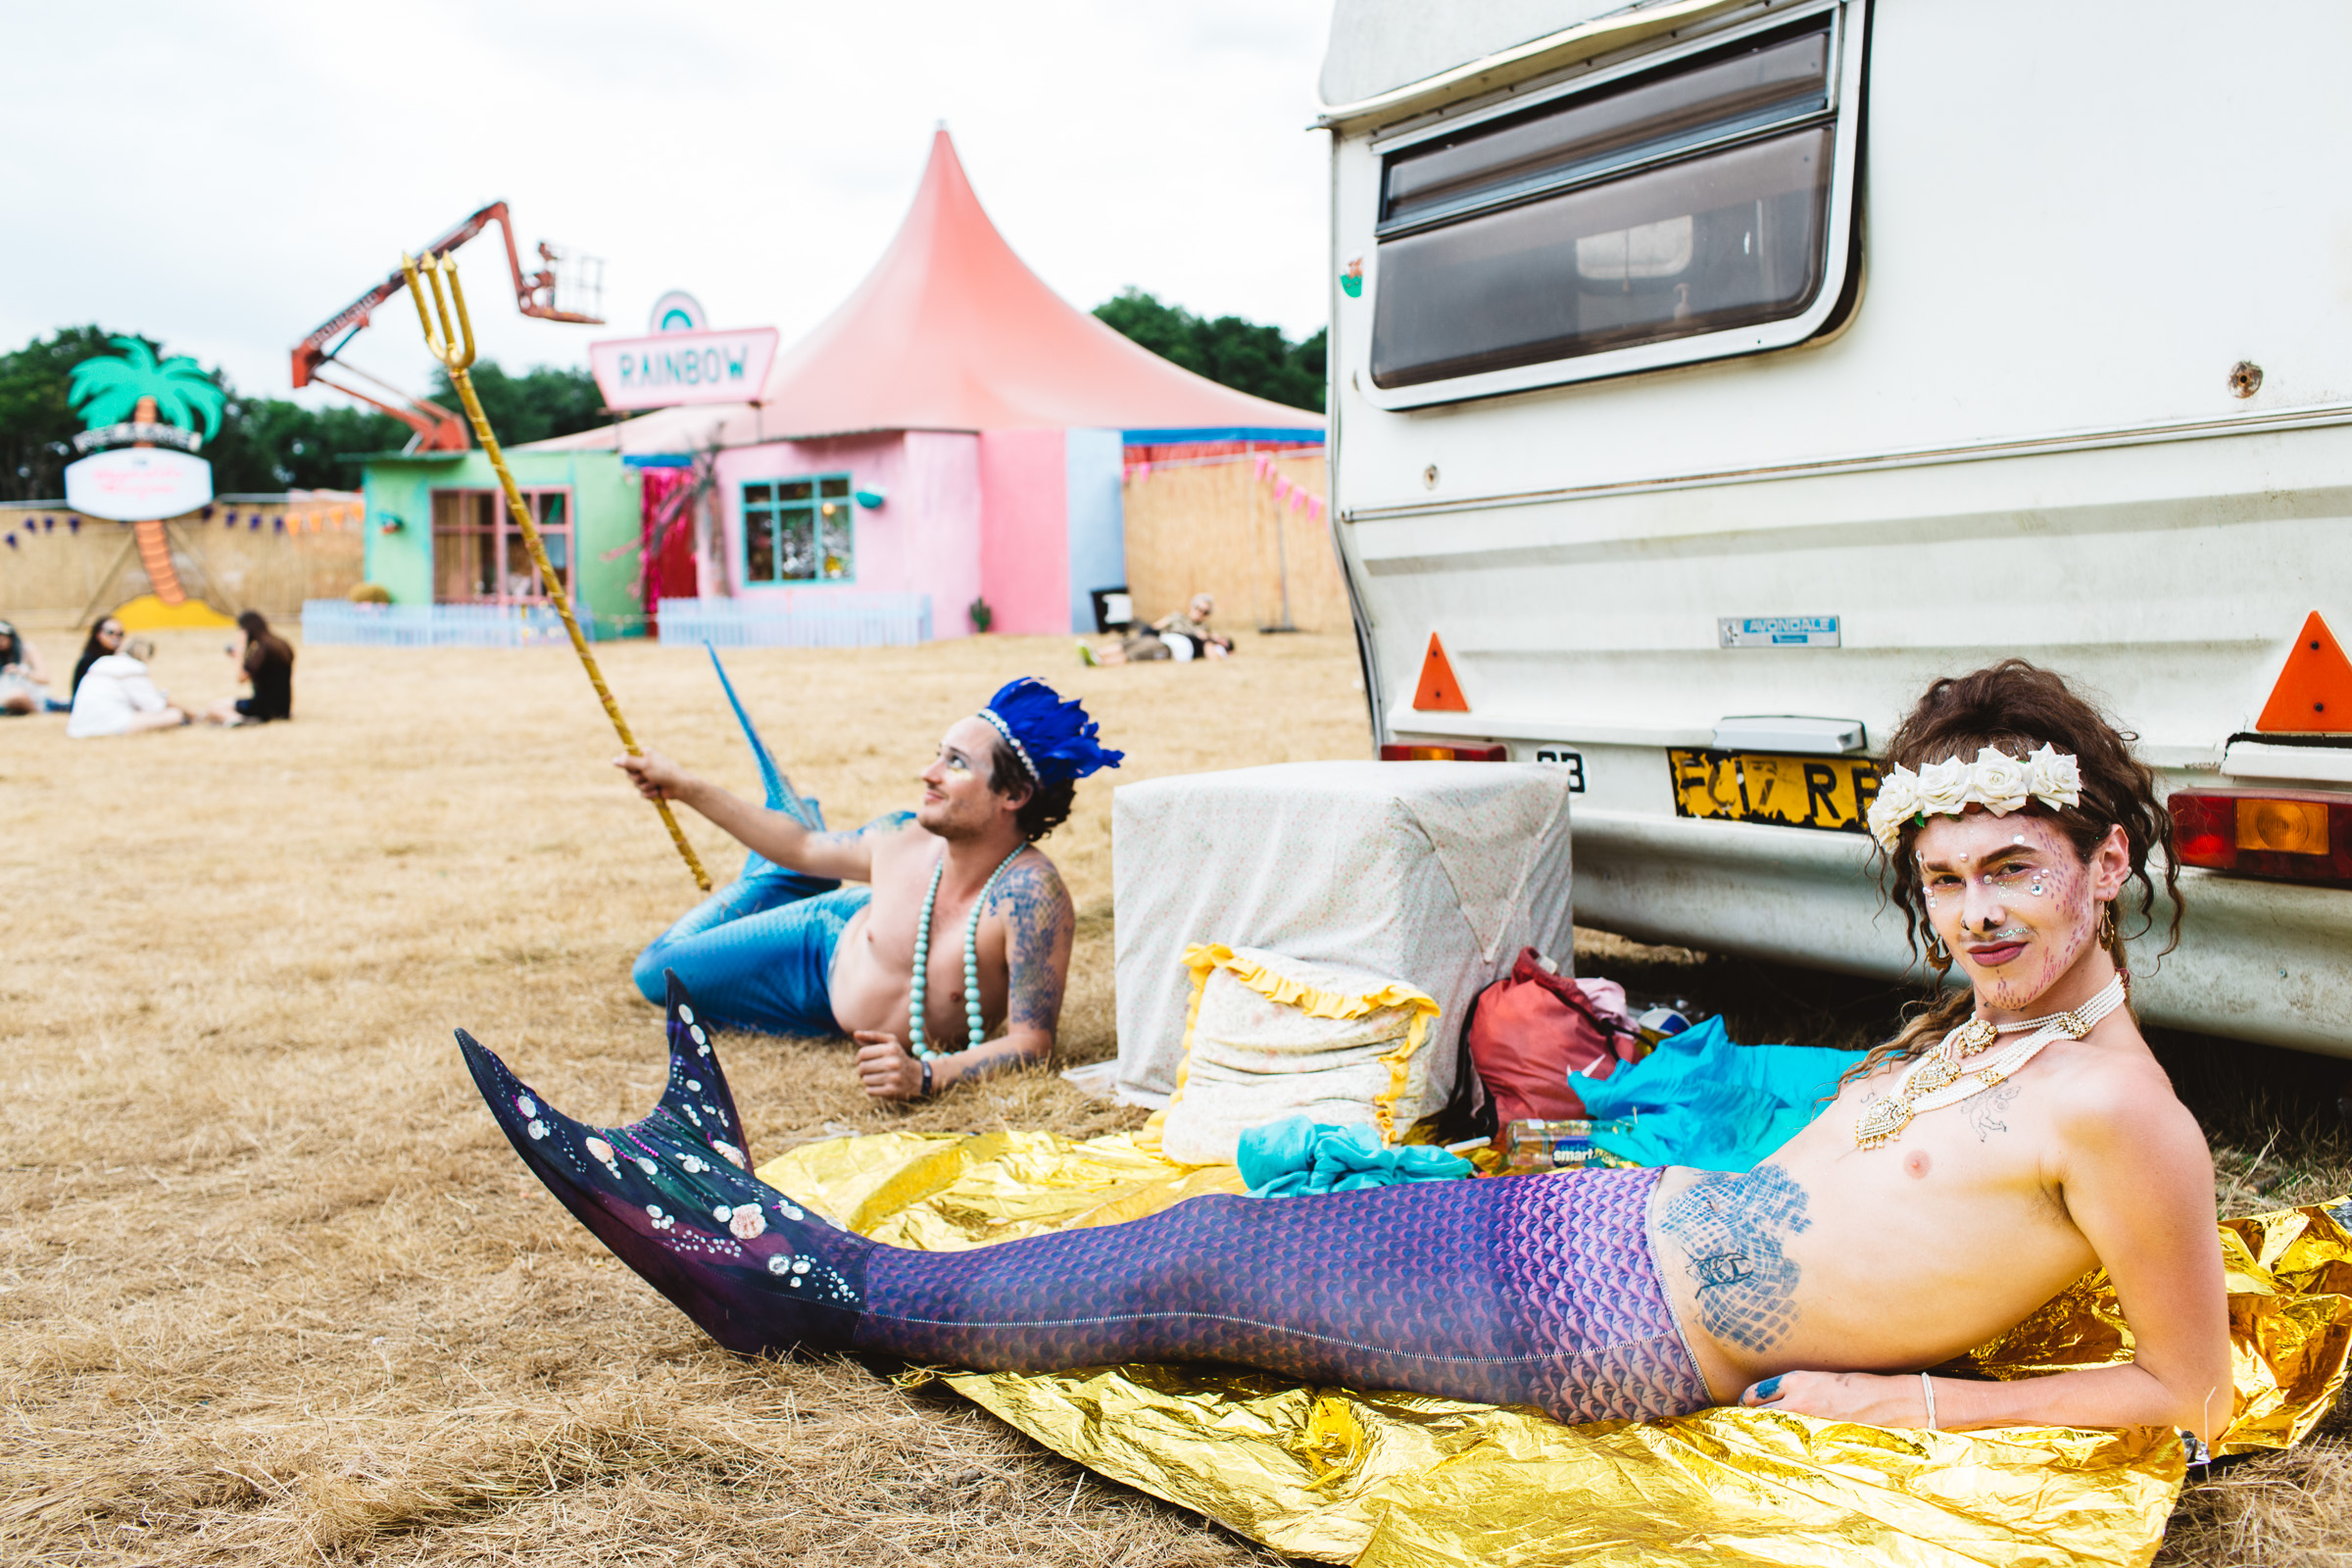 Charity Kase dressed as a mermaid lying by a caravan at Leefest Neverland.